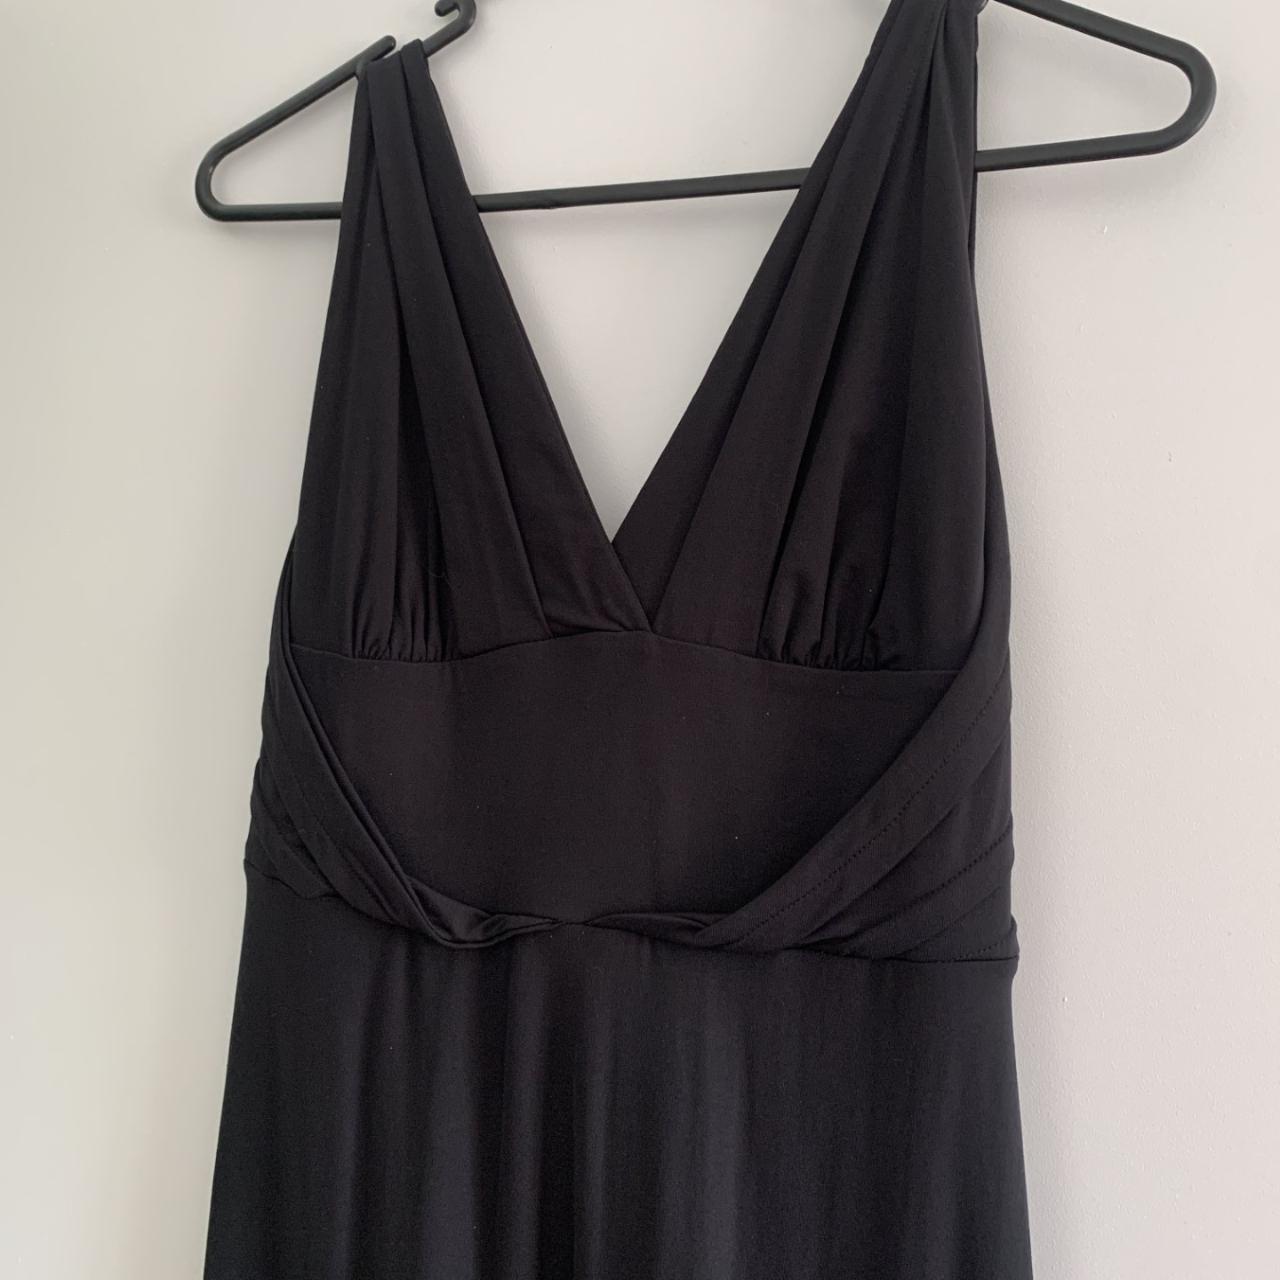 KOOKAI Black Evening Gown Size 1 (Fits 6-10 very... - Depop